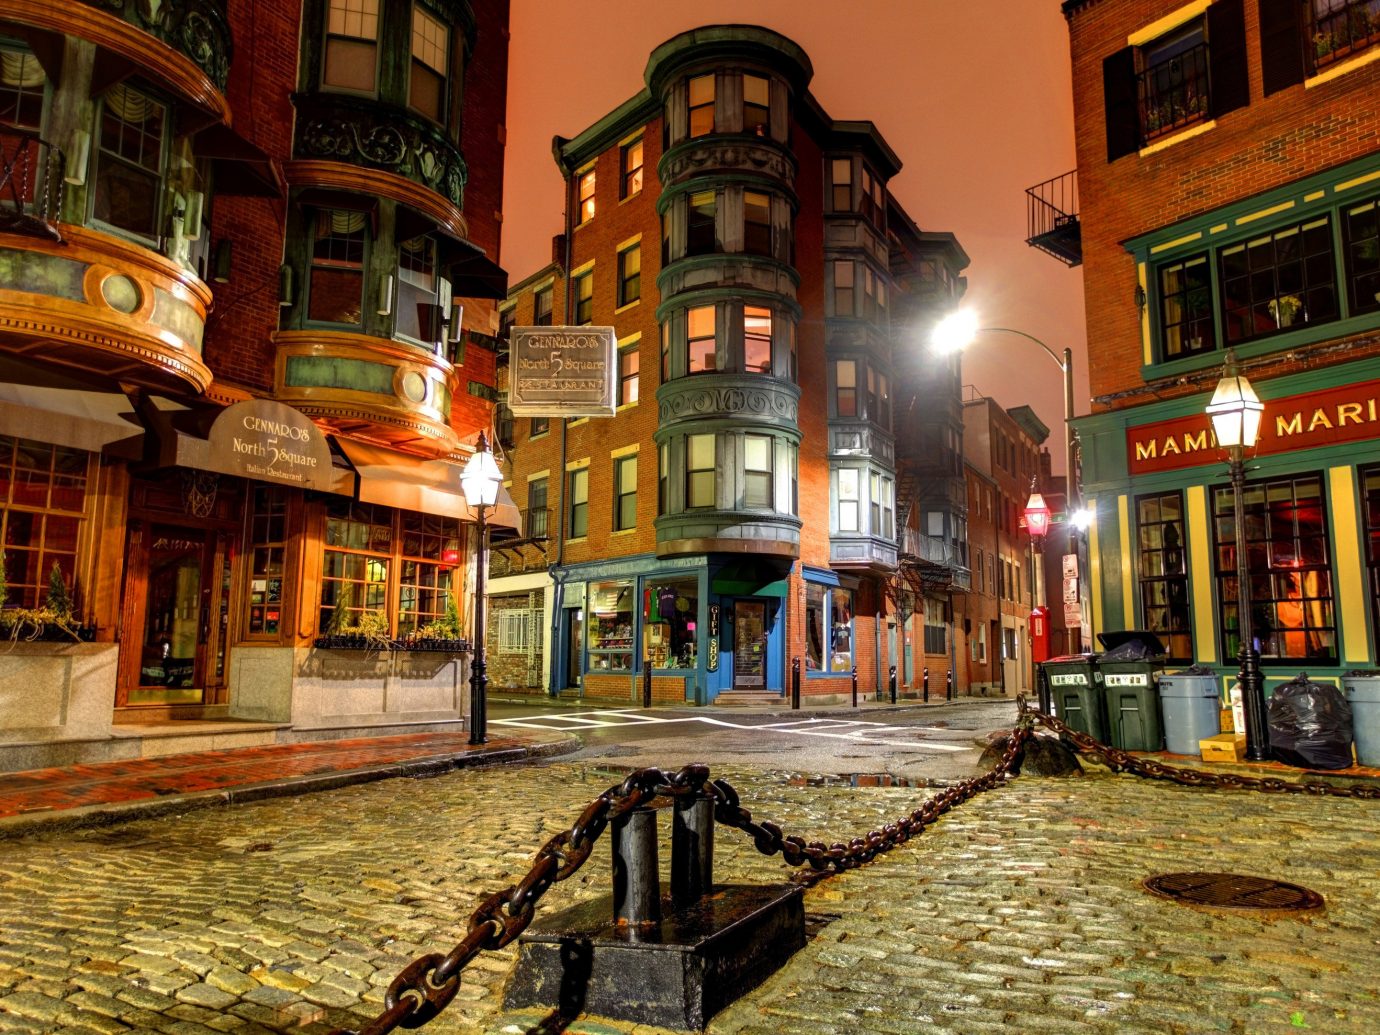 Downtown Boston at night